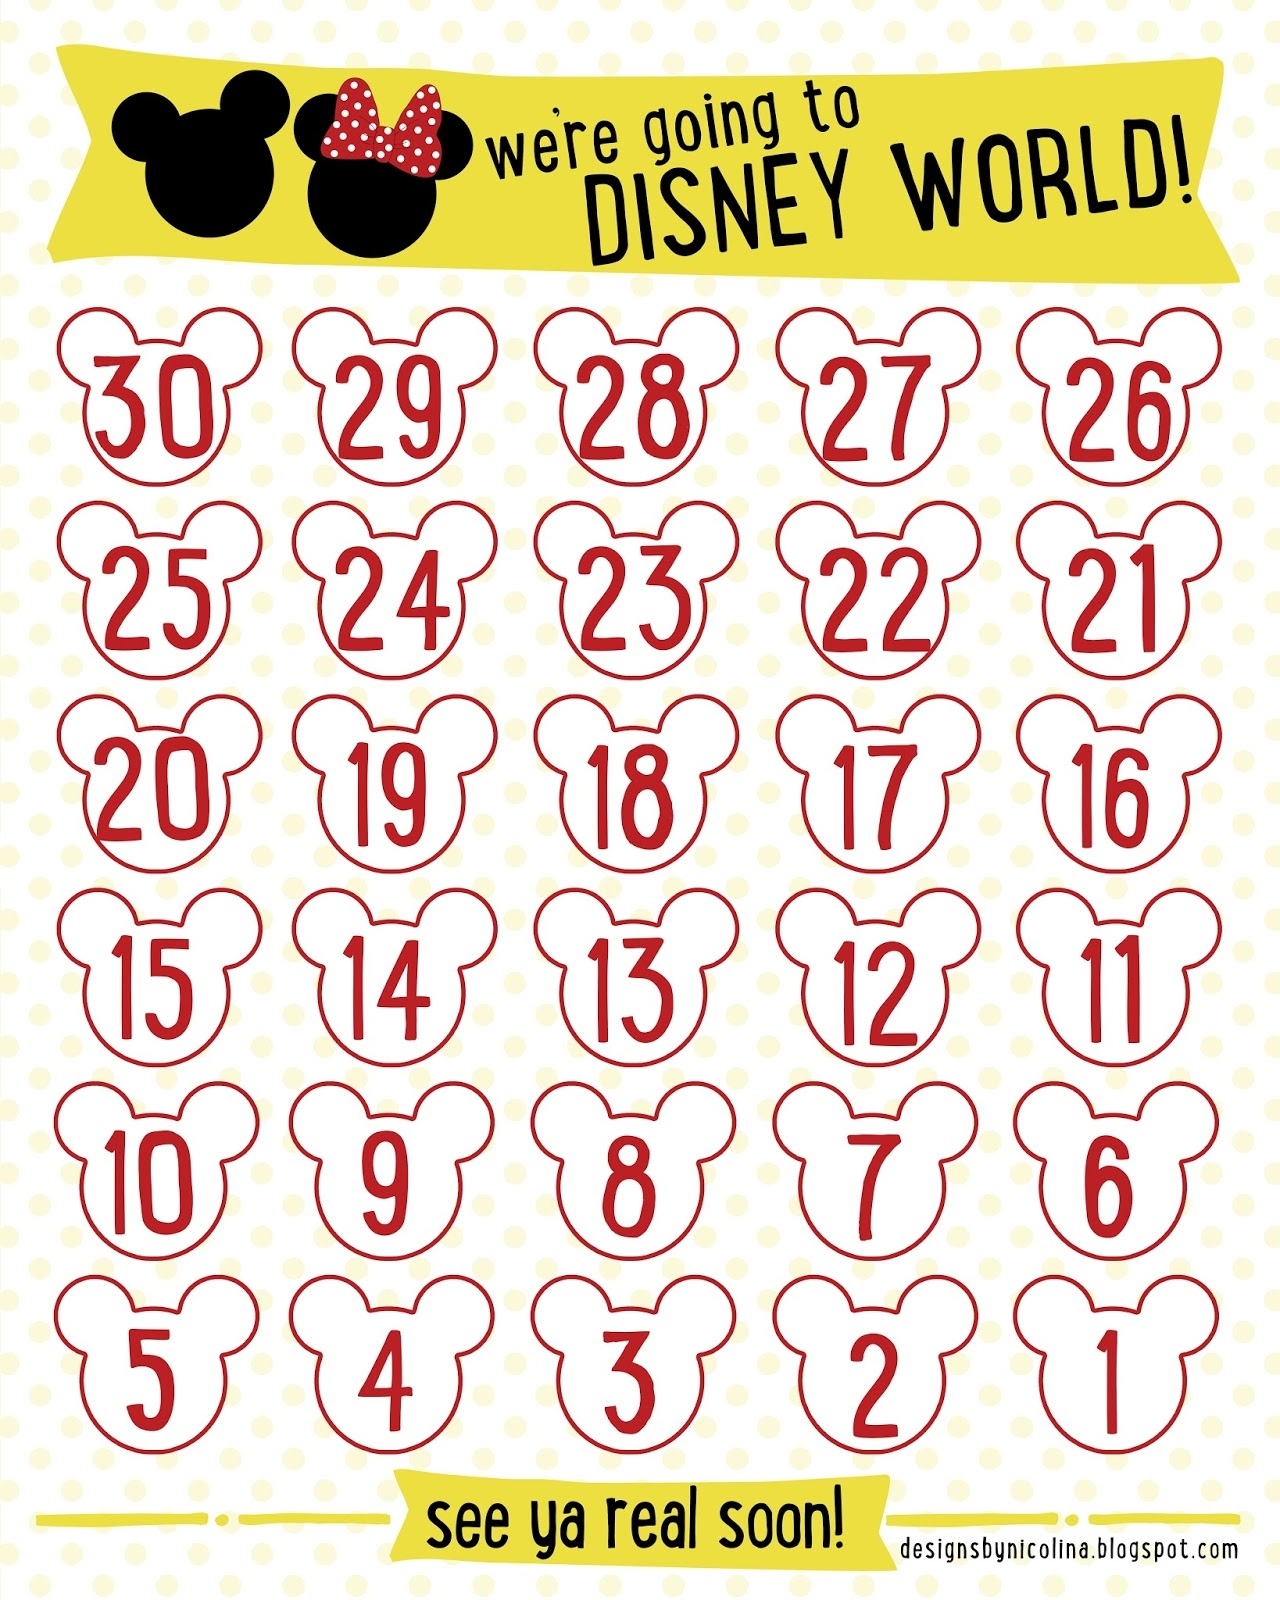 Designs By Nicolina: Disney Countdown! /// Free Printable /// Dashing Count Down To Disney Printables